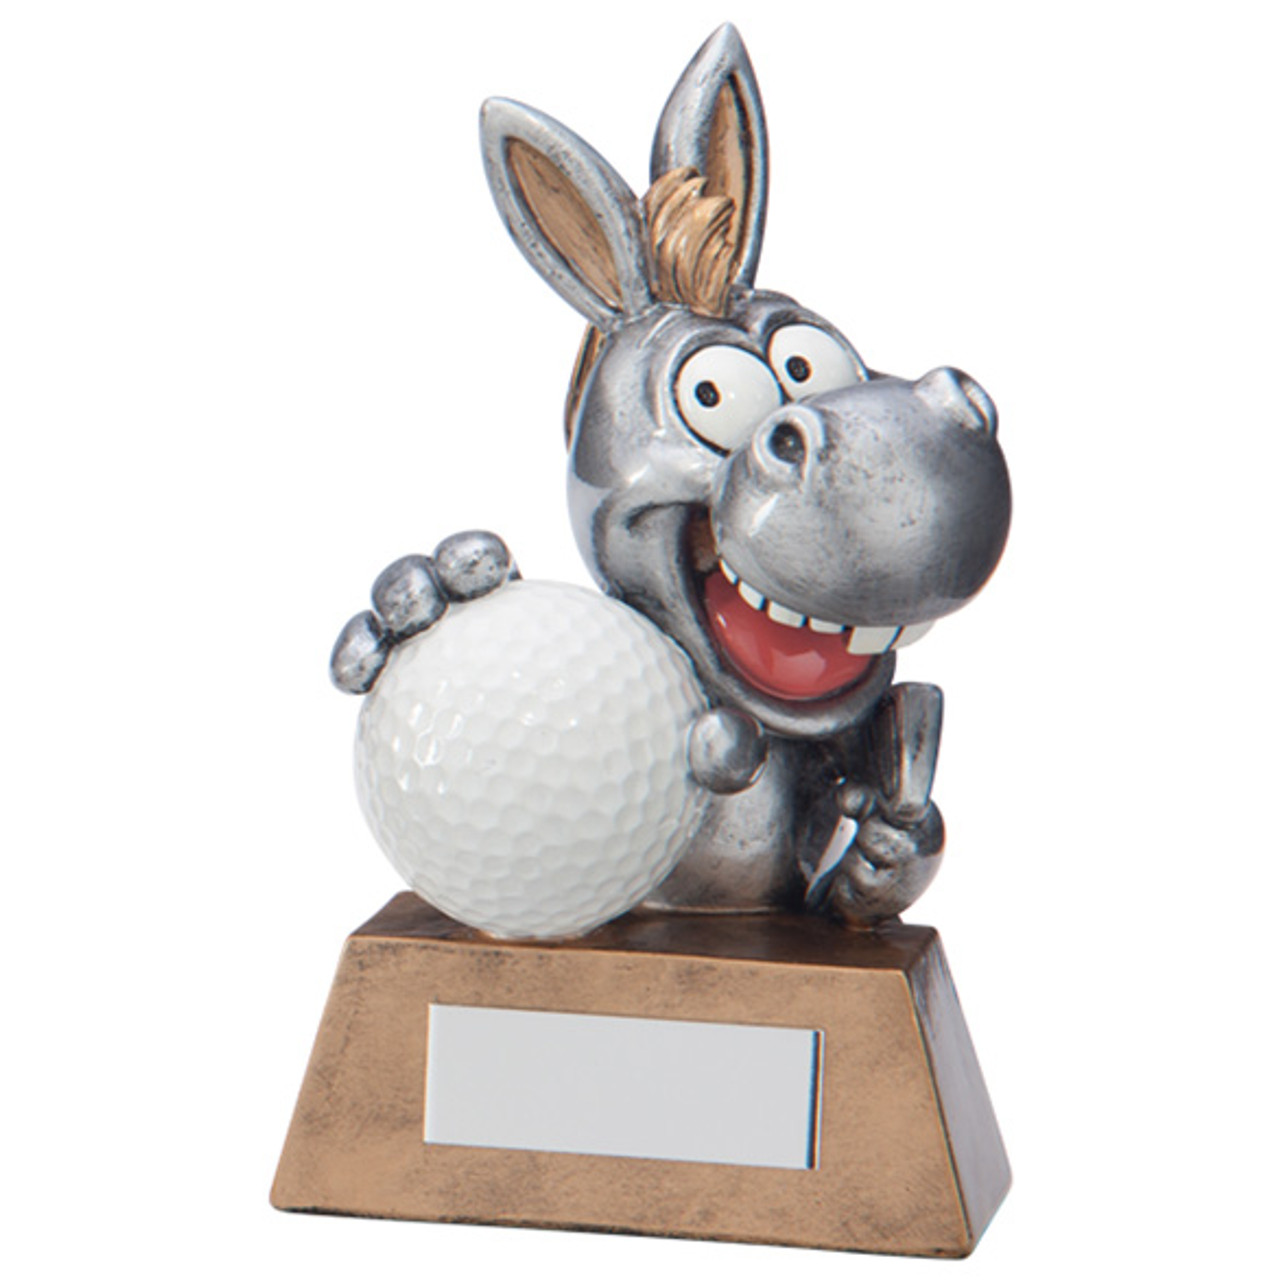 What A Donkey! Novelty fun comic cheap budget golf award